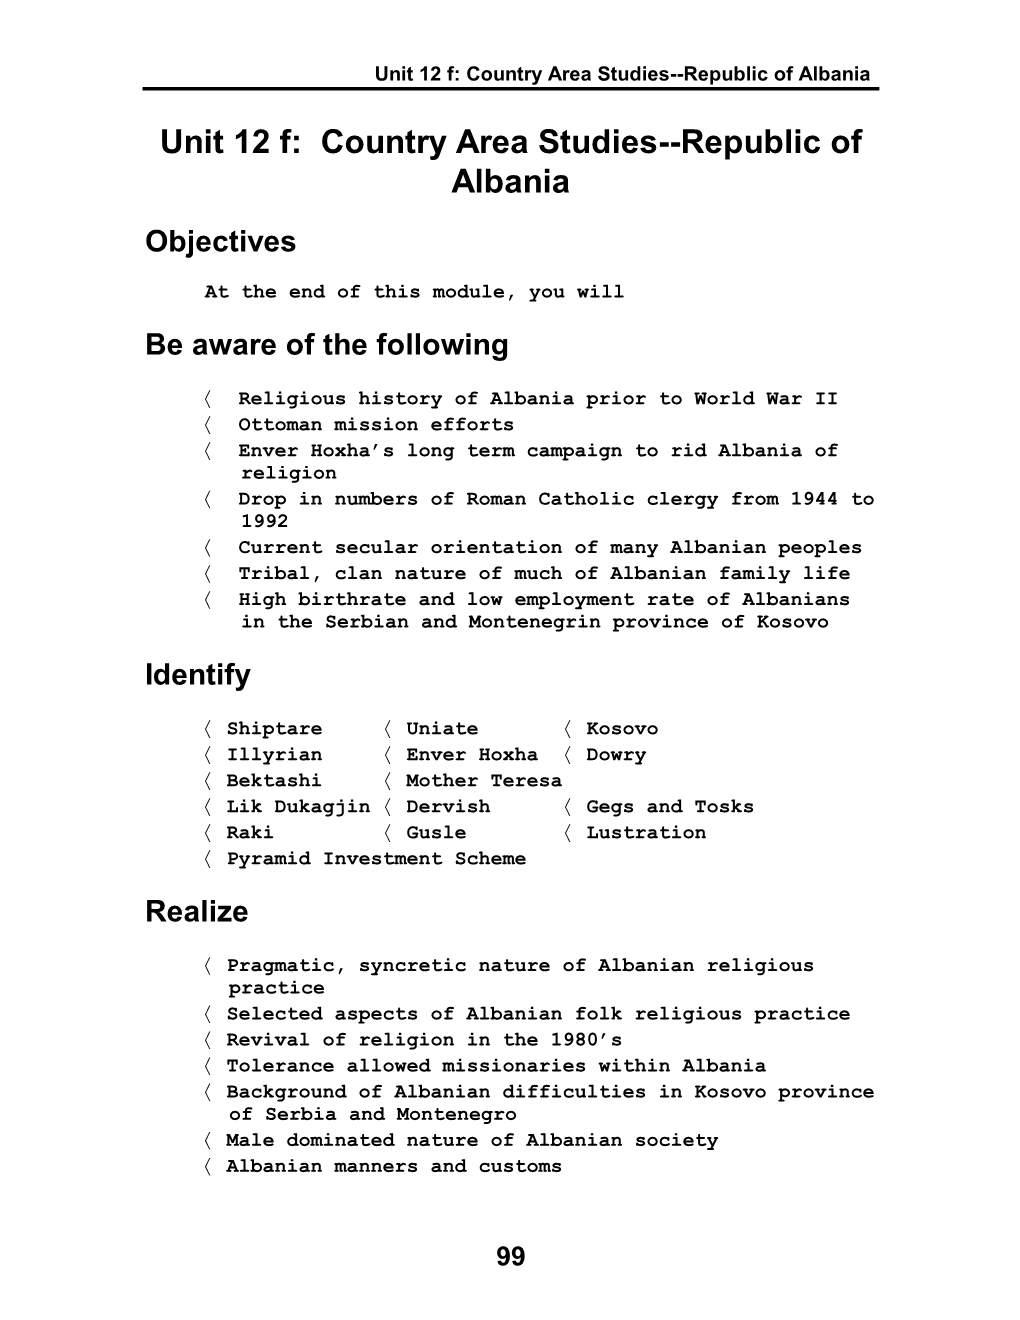 Country Area Studies--Republic of Albania